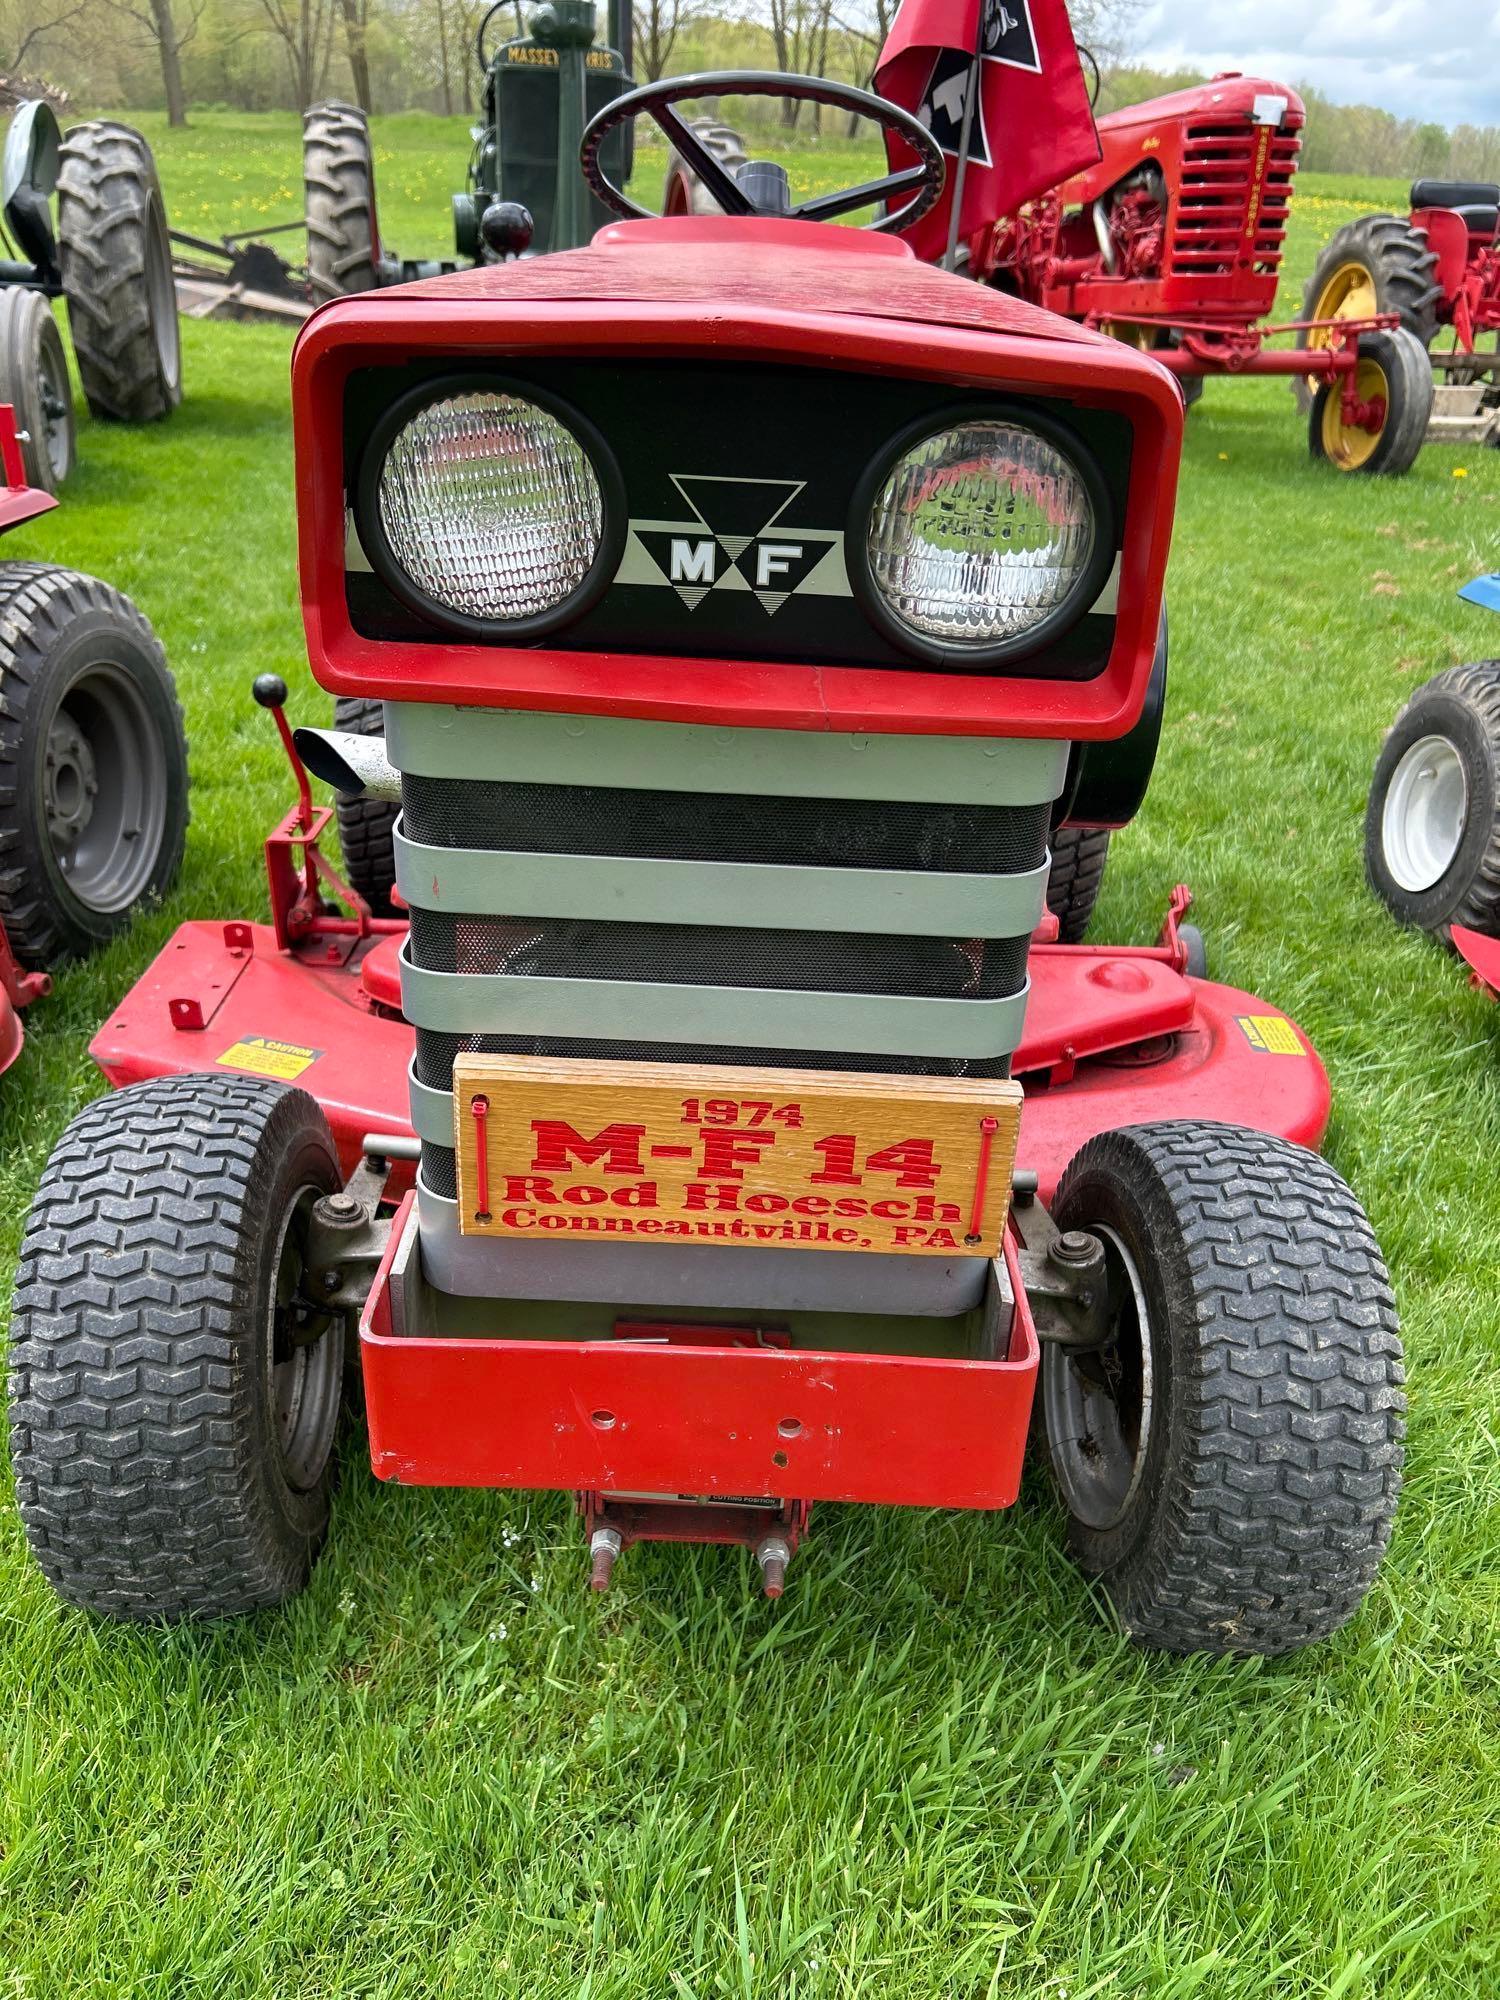 1974 mf 14 hydra speed lawn tractor